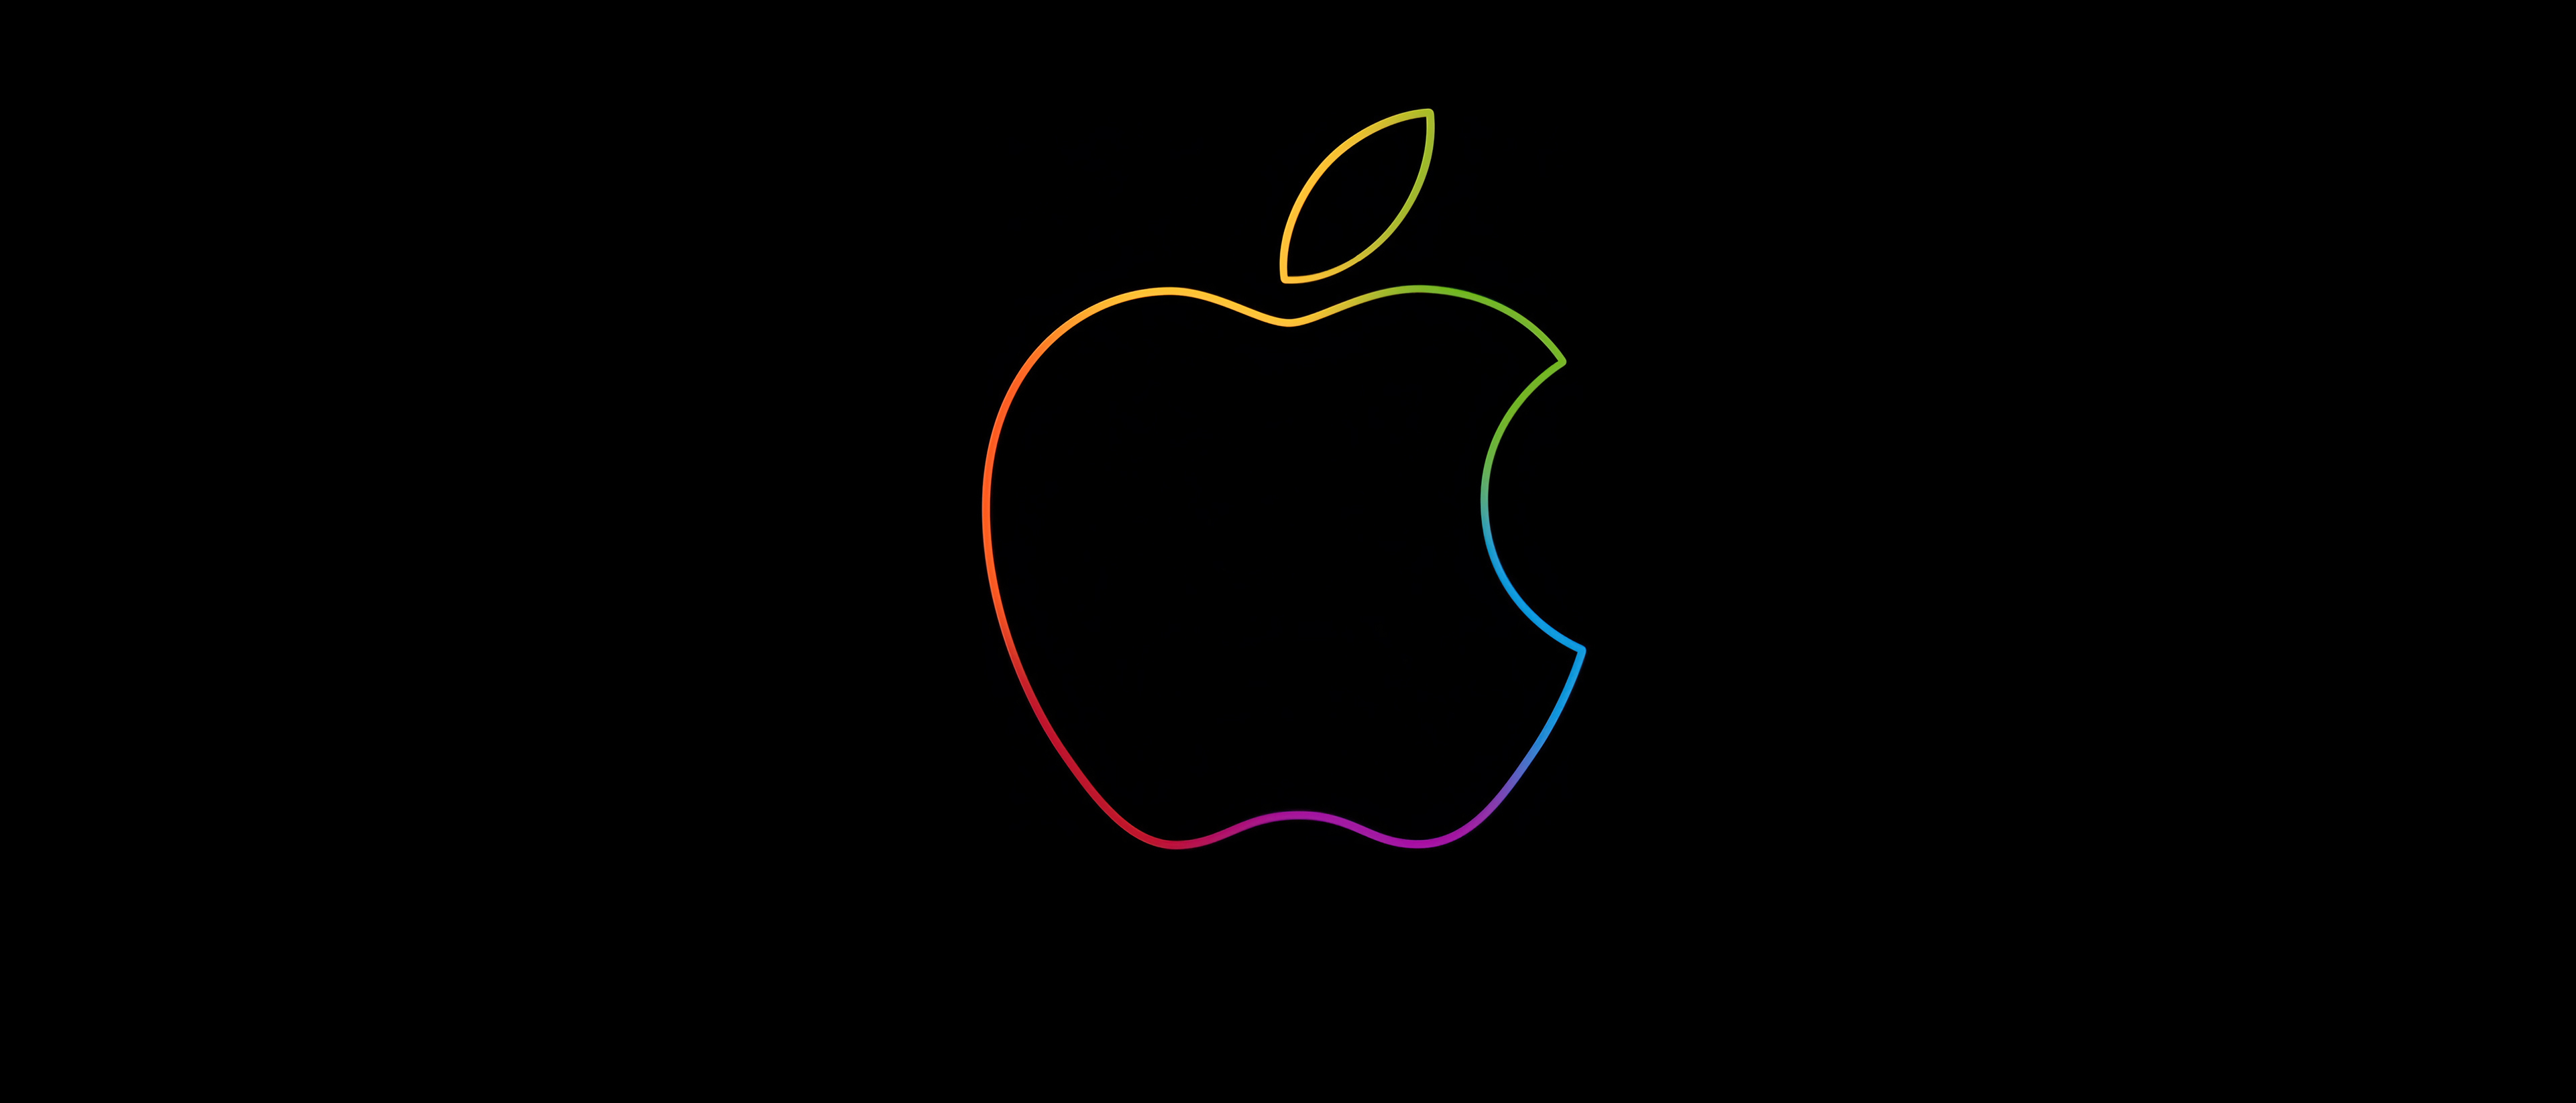 3840x1644 Apple 4k Neon Logo 3840x1644 Resolution Wallpaper, HD Hi-Tech ...